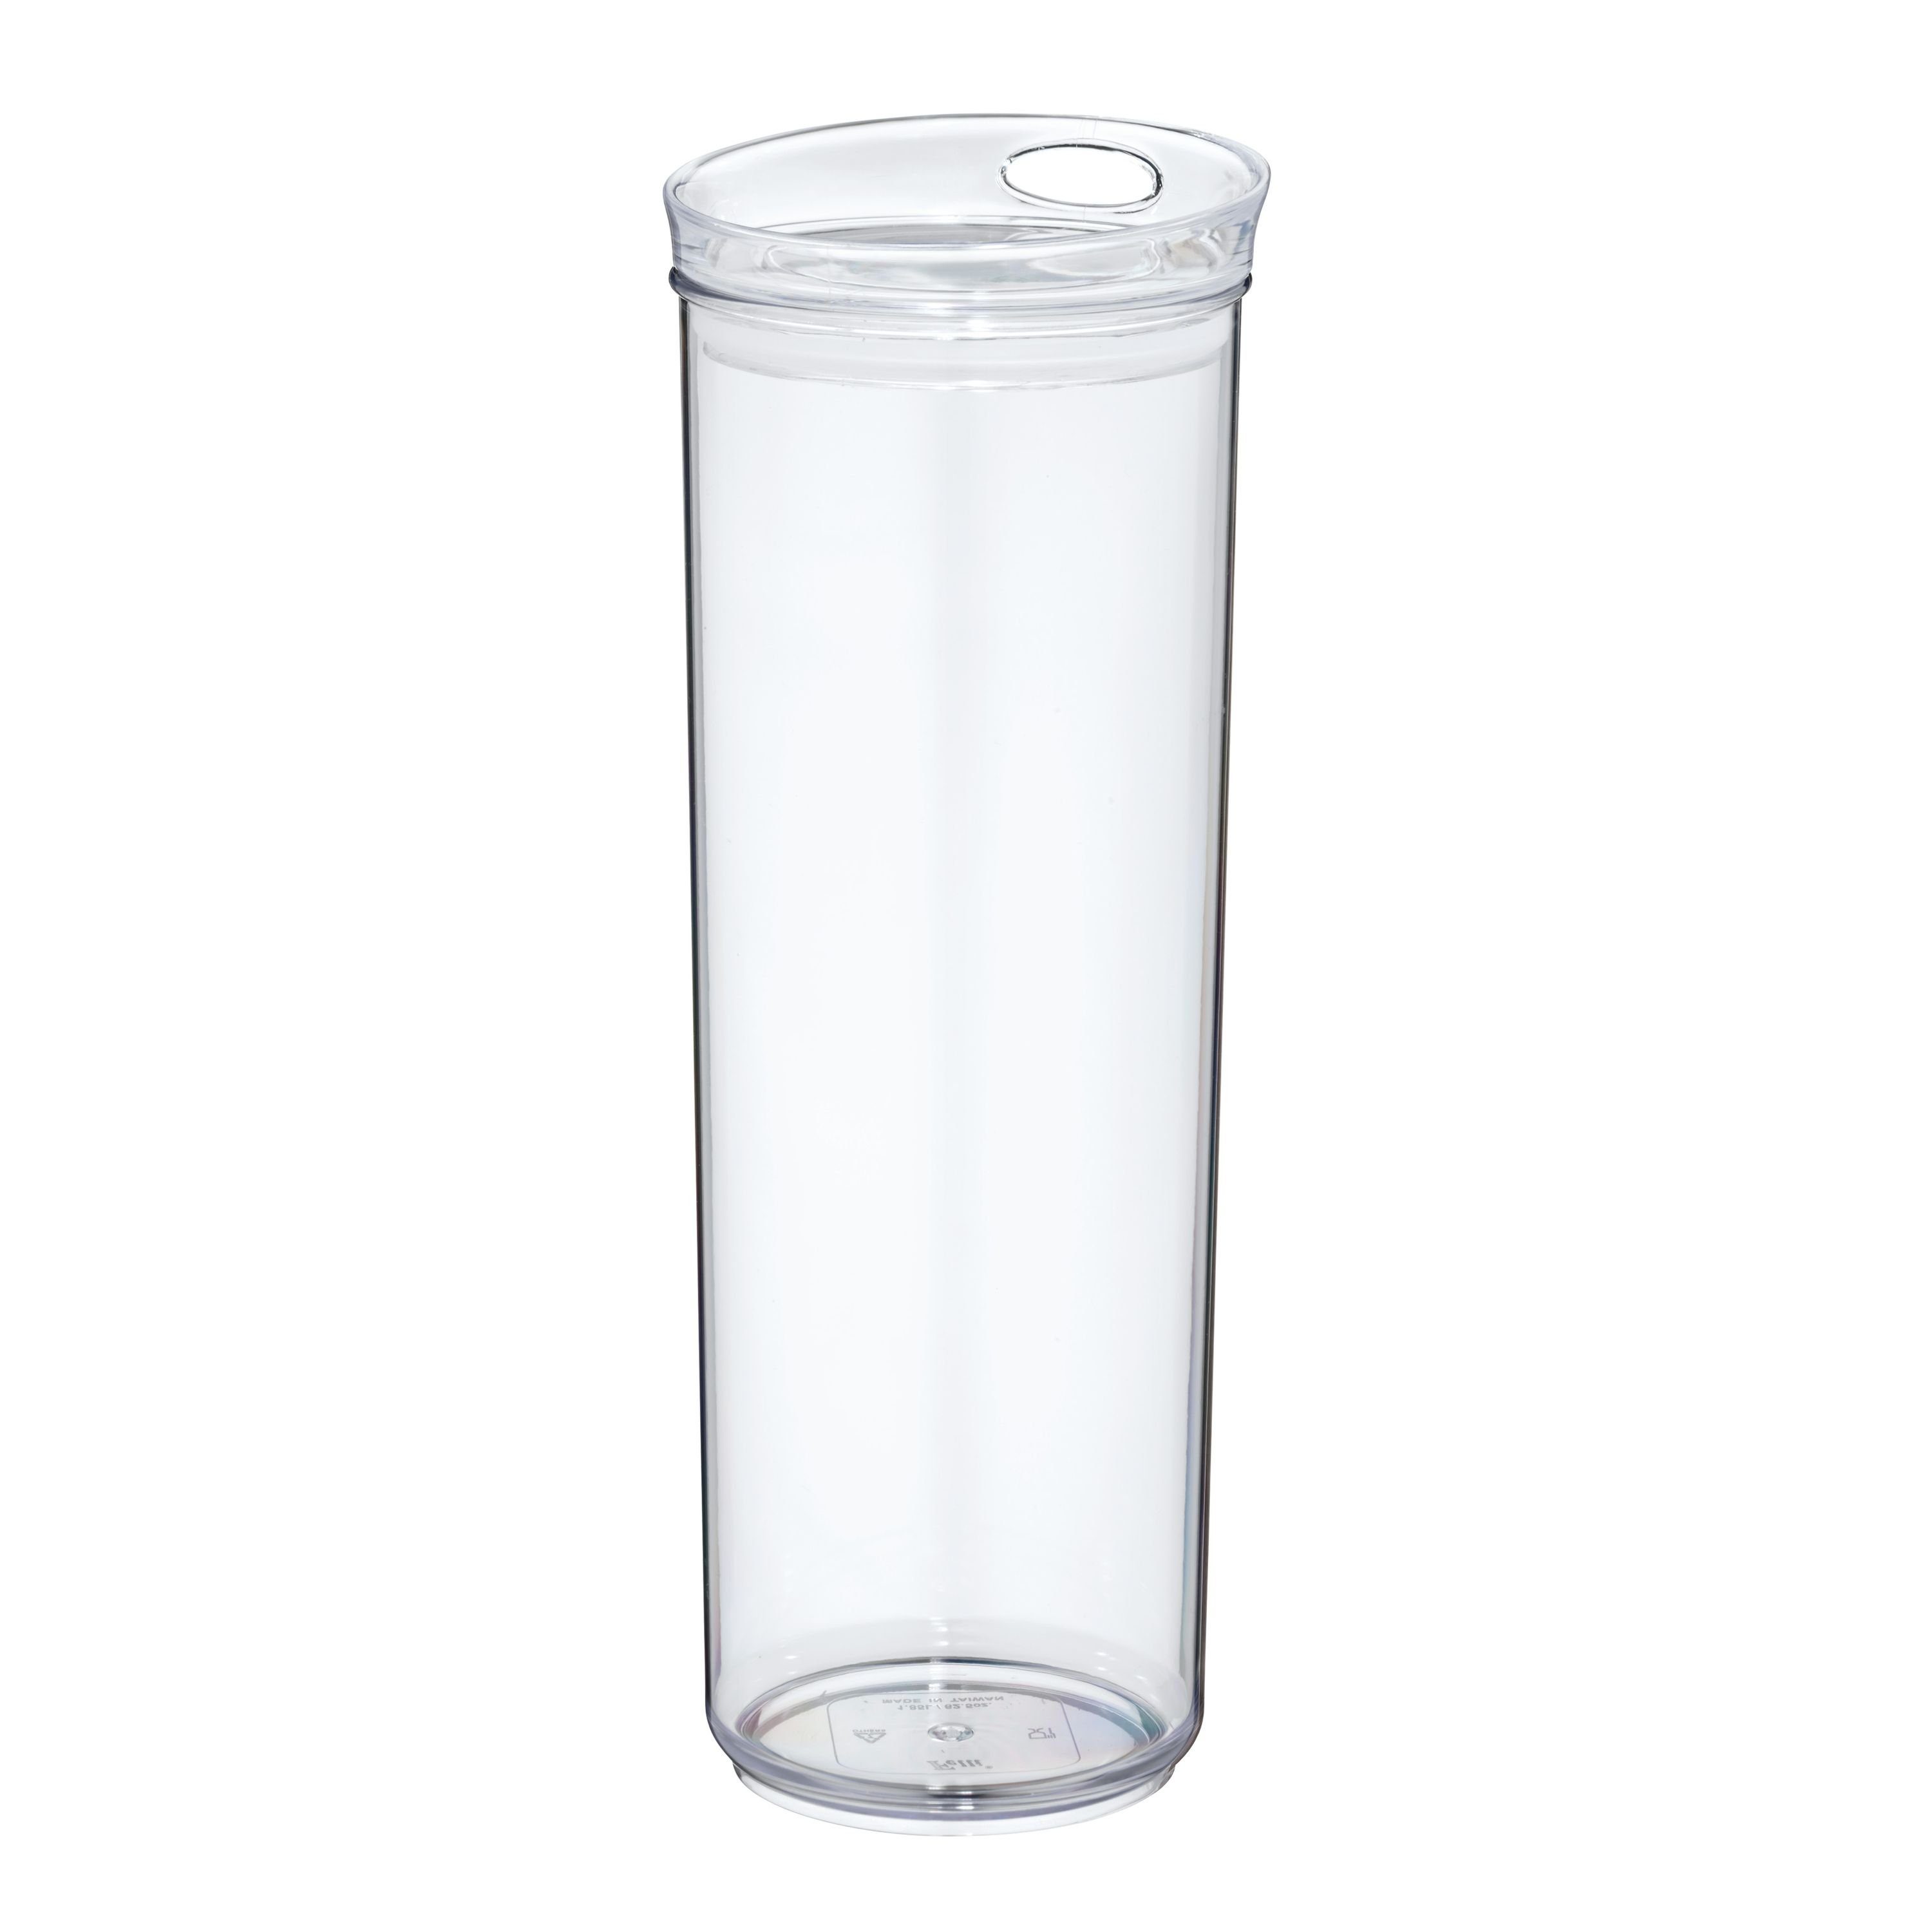 Vorratsglas klar Deckel Vorrats-Dose Jule 1.9L rund, Kunststoff-Behälter Kela Glas kela +